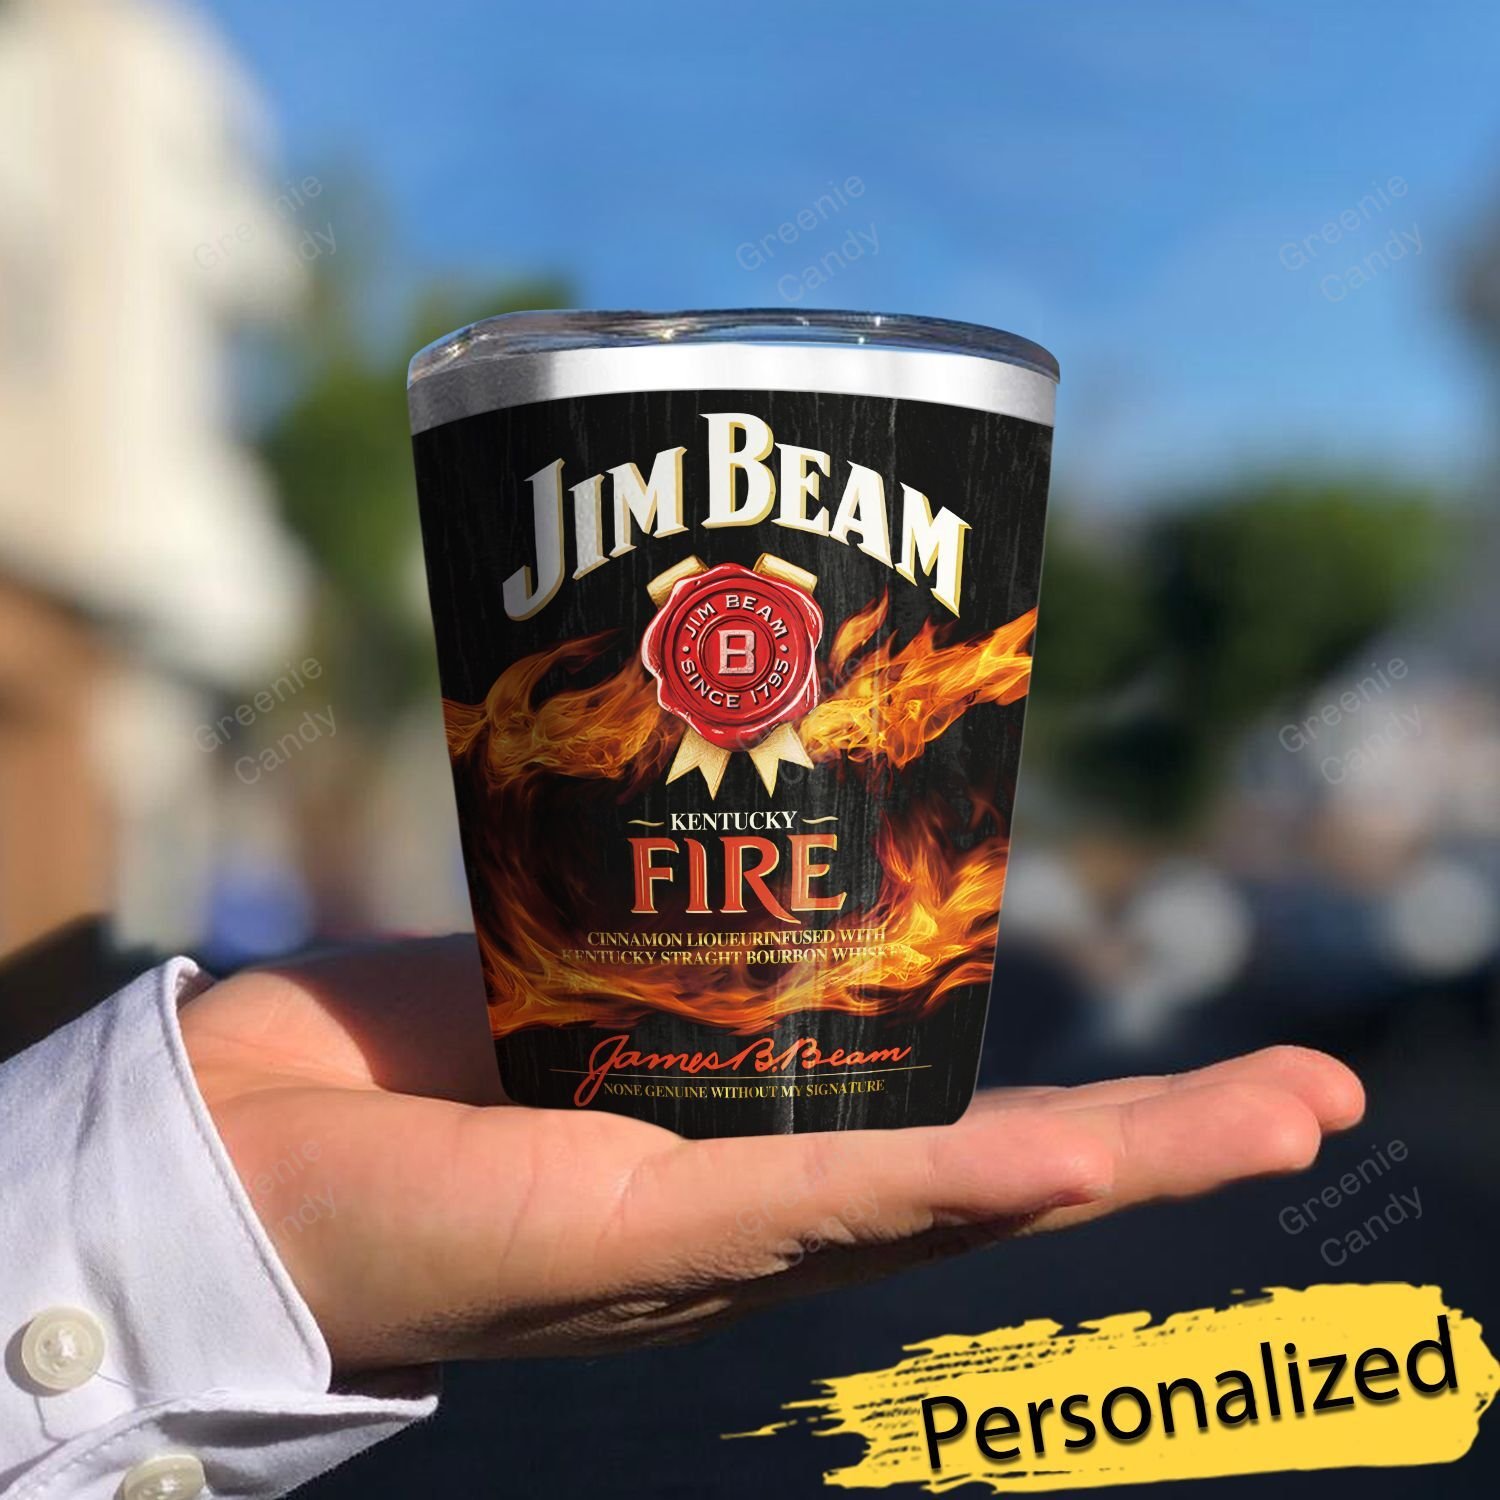 Personalized_Jim_Beam_Fire_Whiskey_Tumbler_1